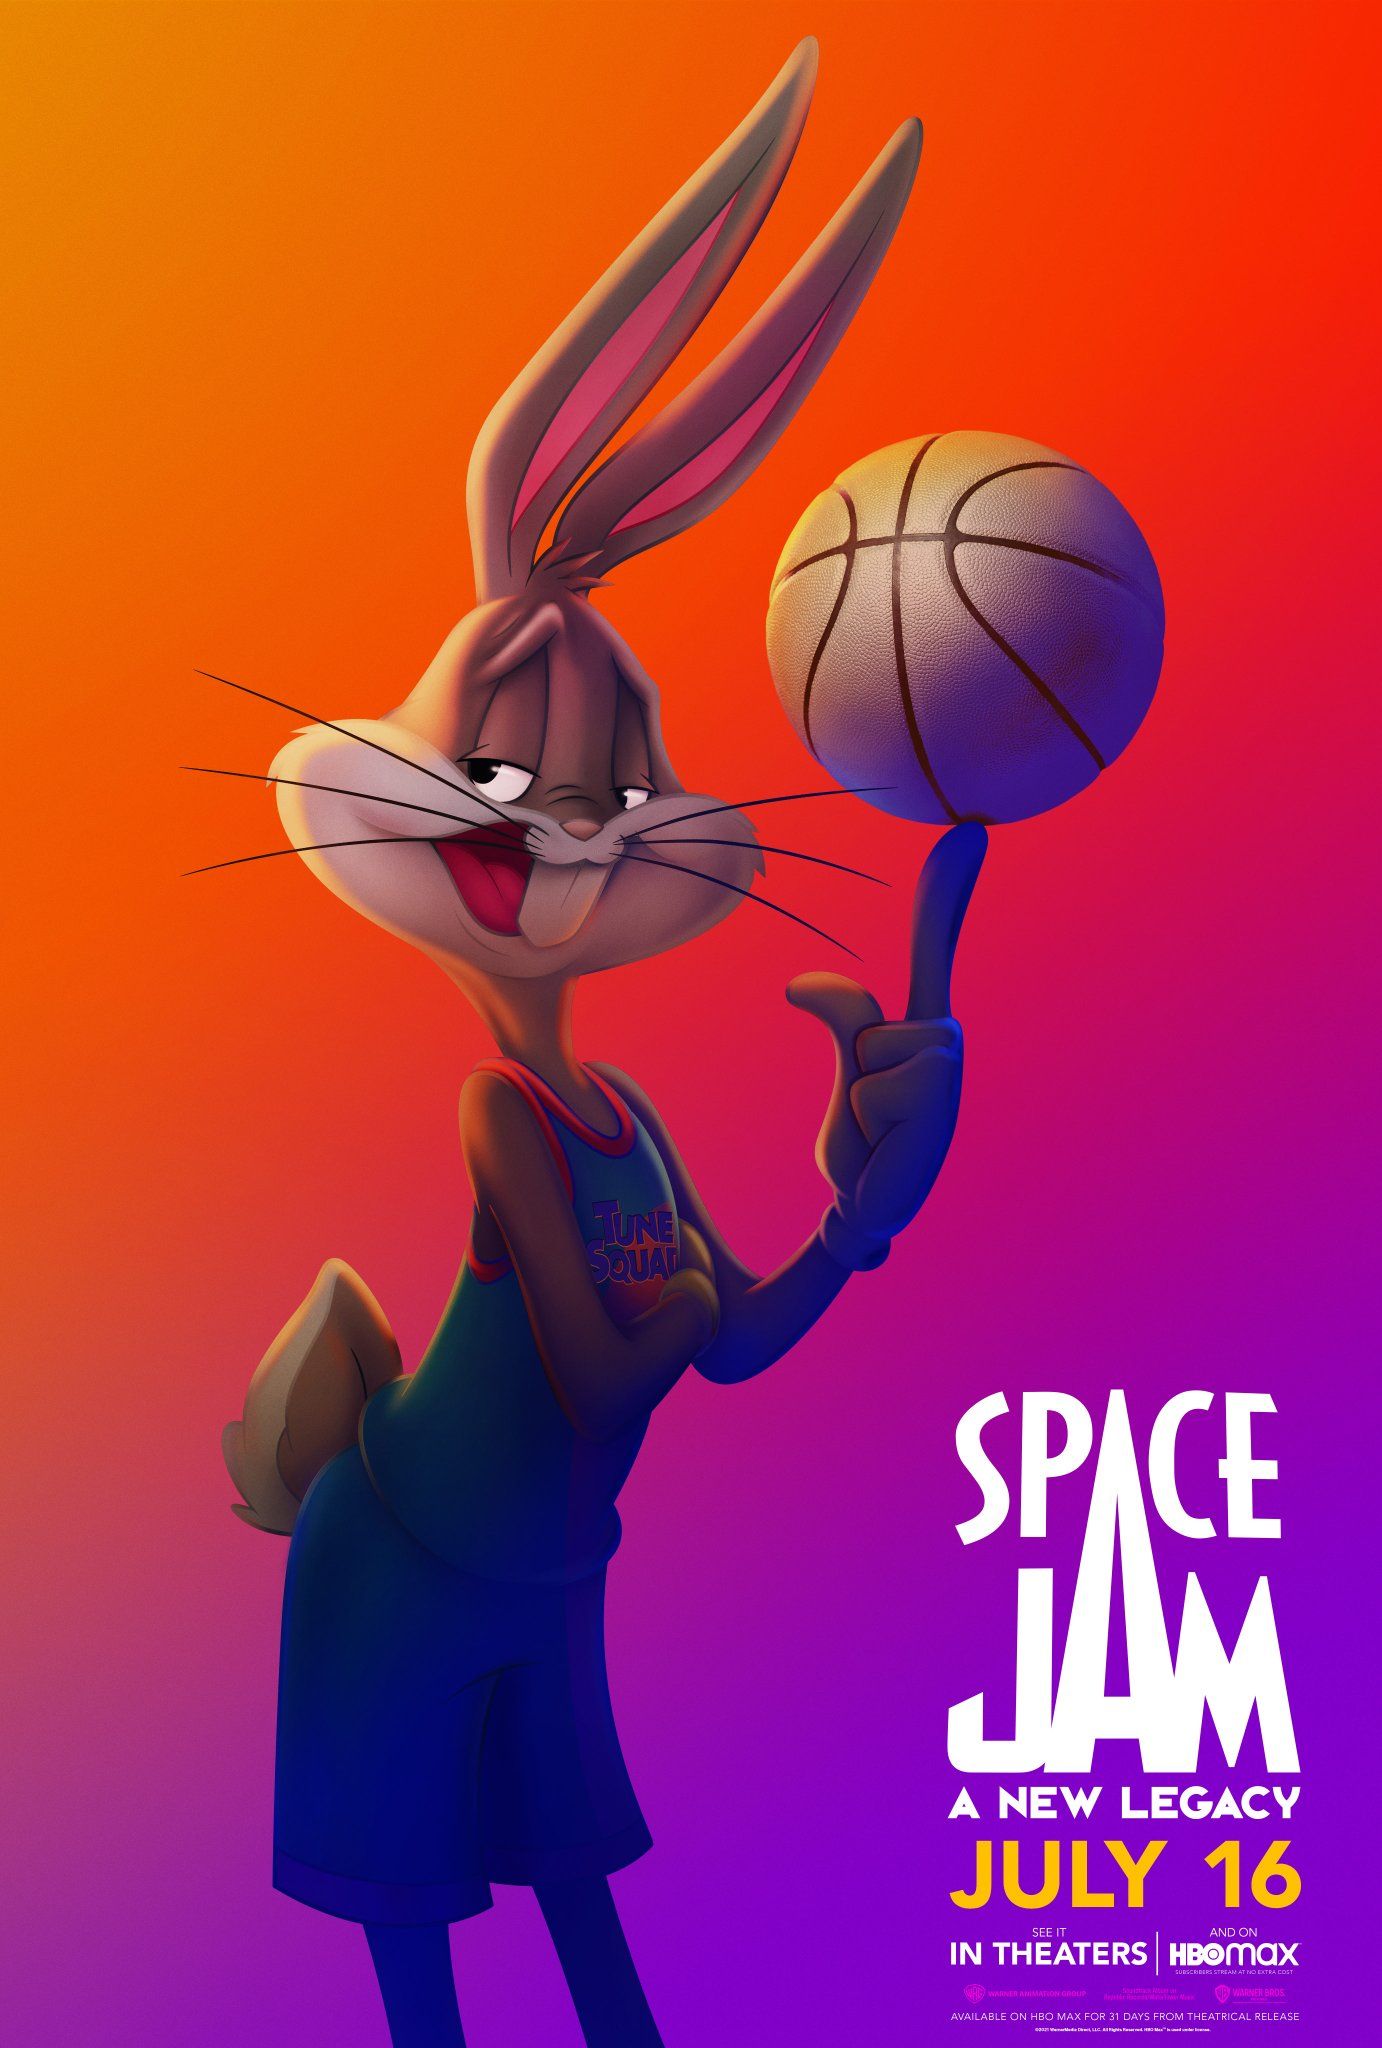 cartoonbrew.com News on Twitter. Space jam, Legacies poster, Space jam 2